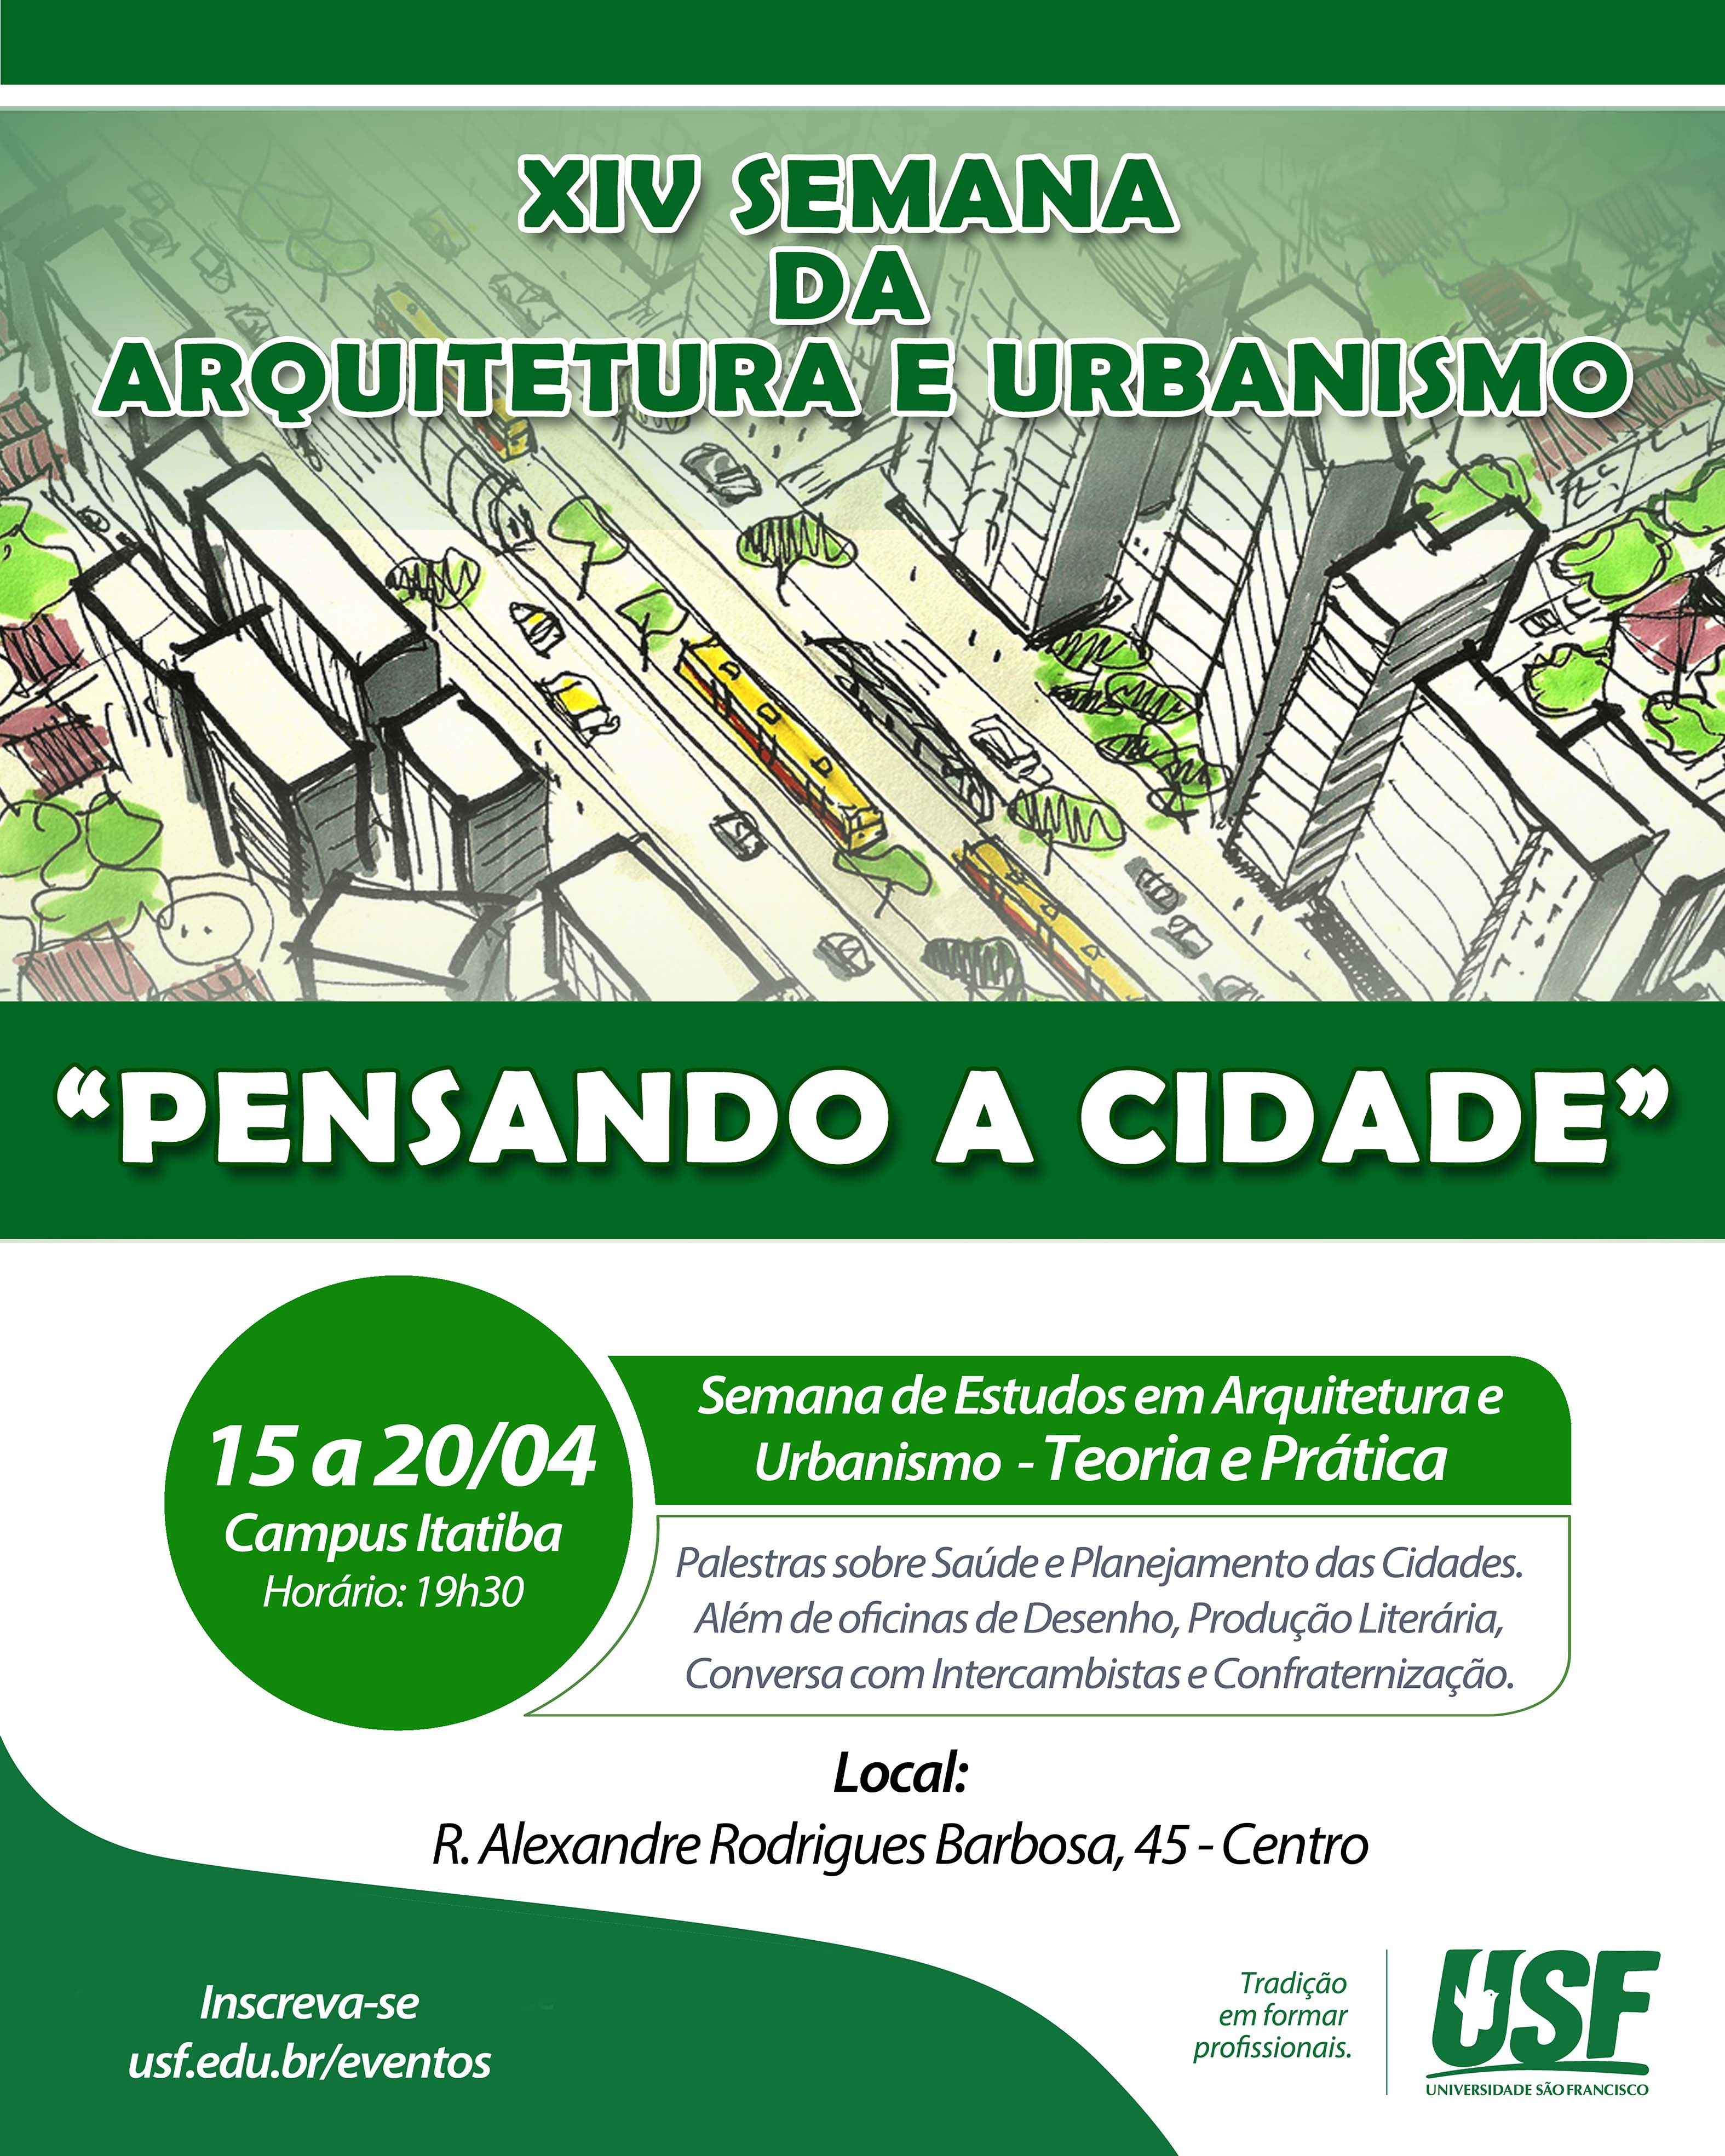 XIV Semana da Arquitetura e Urbanismo